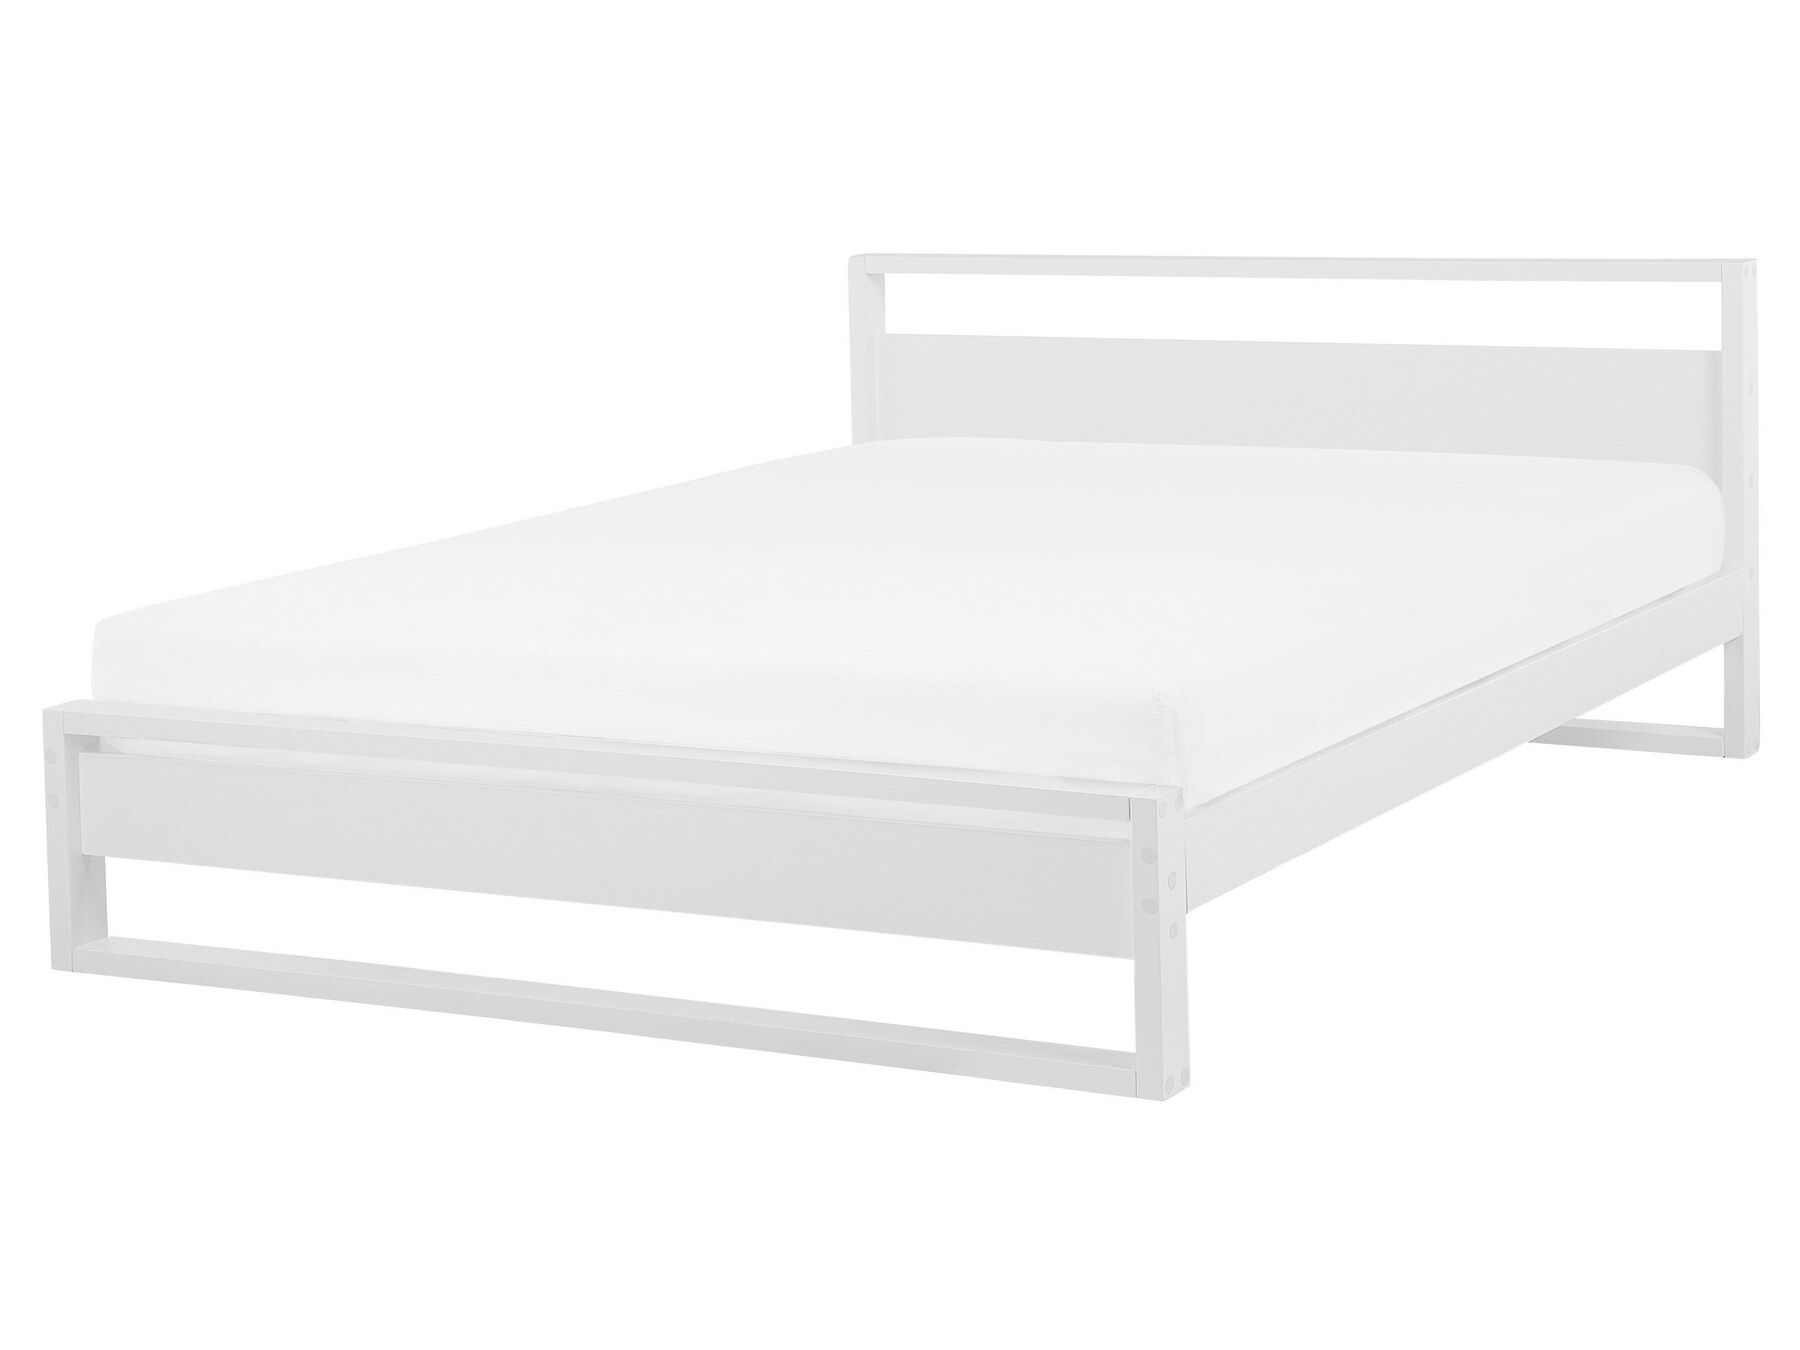 Drevená posteľ 160 x 200 cm biela GIULIA_743777